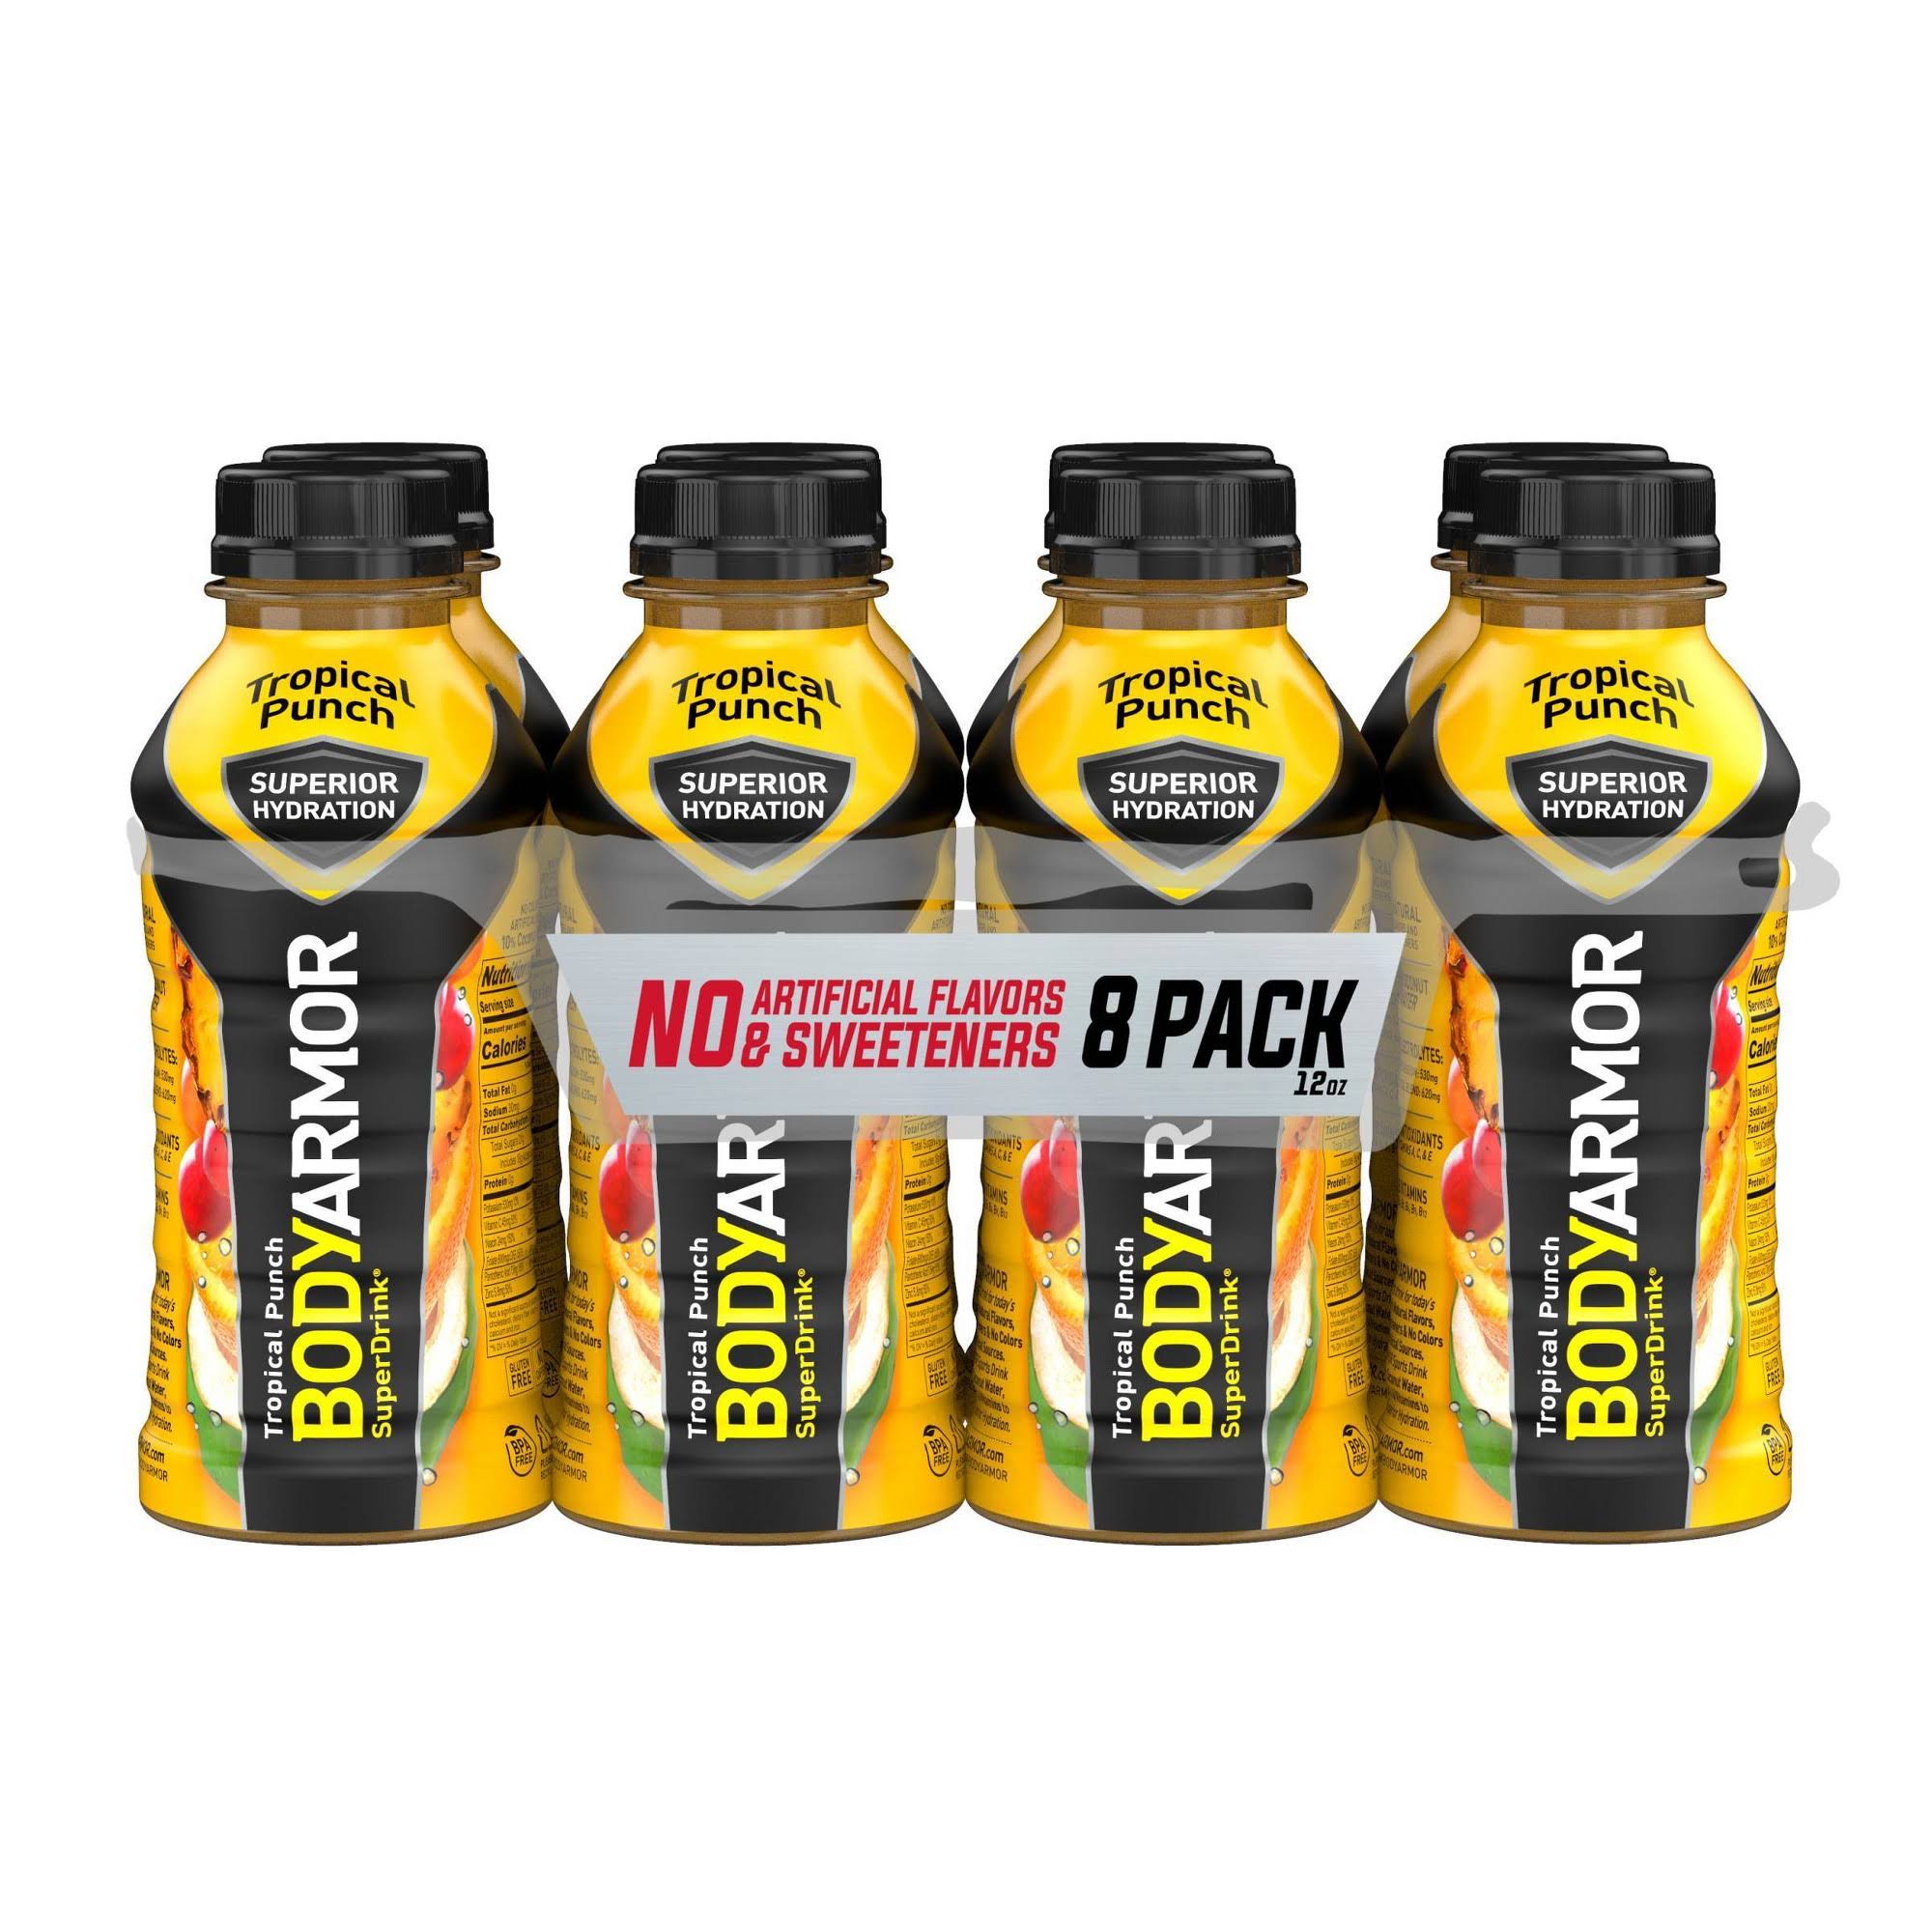 Body Armor Super Drink, Tropical Punch, 8 Pack - 8 pack, 12 fl oz bottles